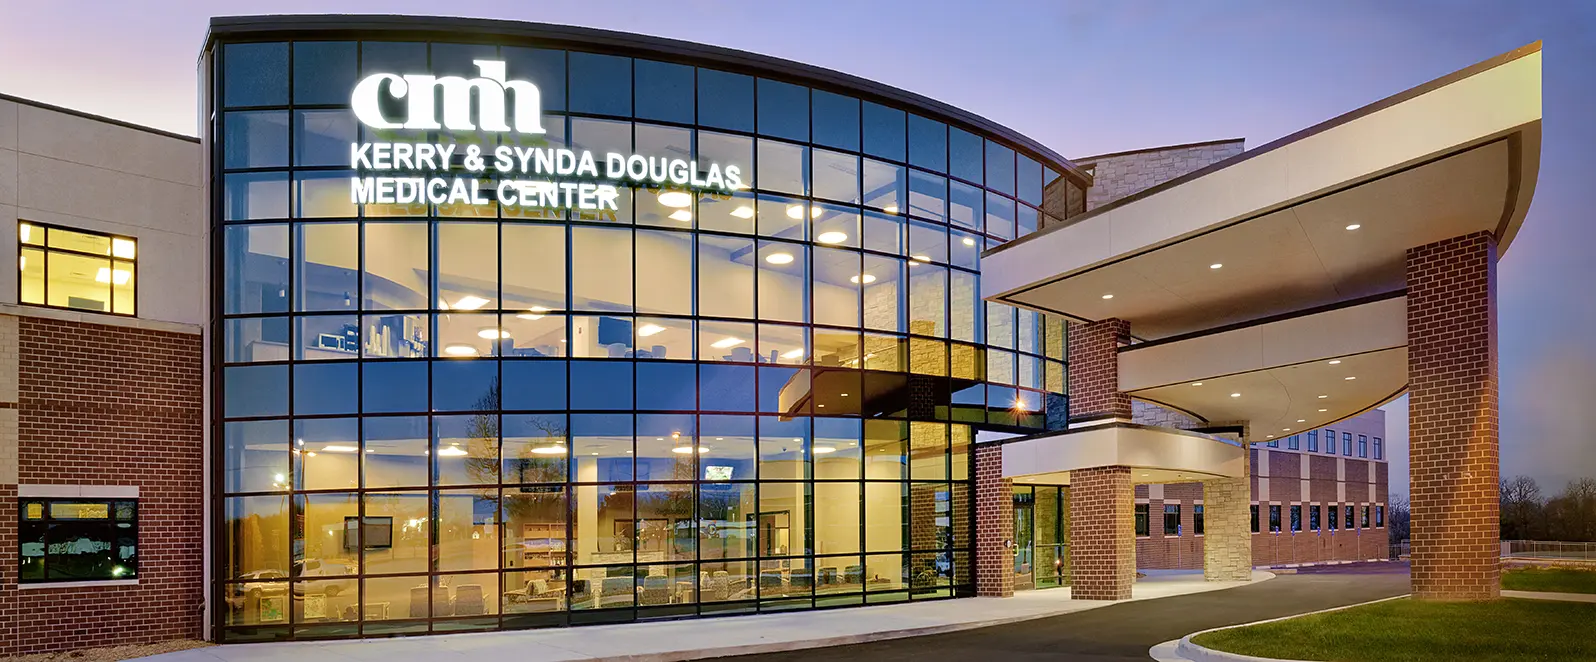 CMH Urology Surgical Clinic at Douglas Medical Center building exterior